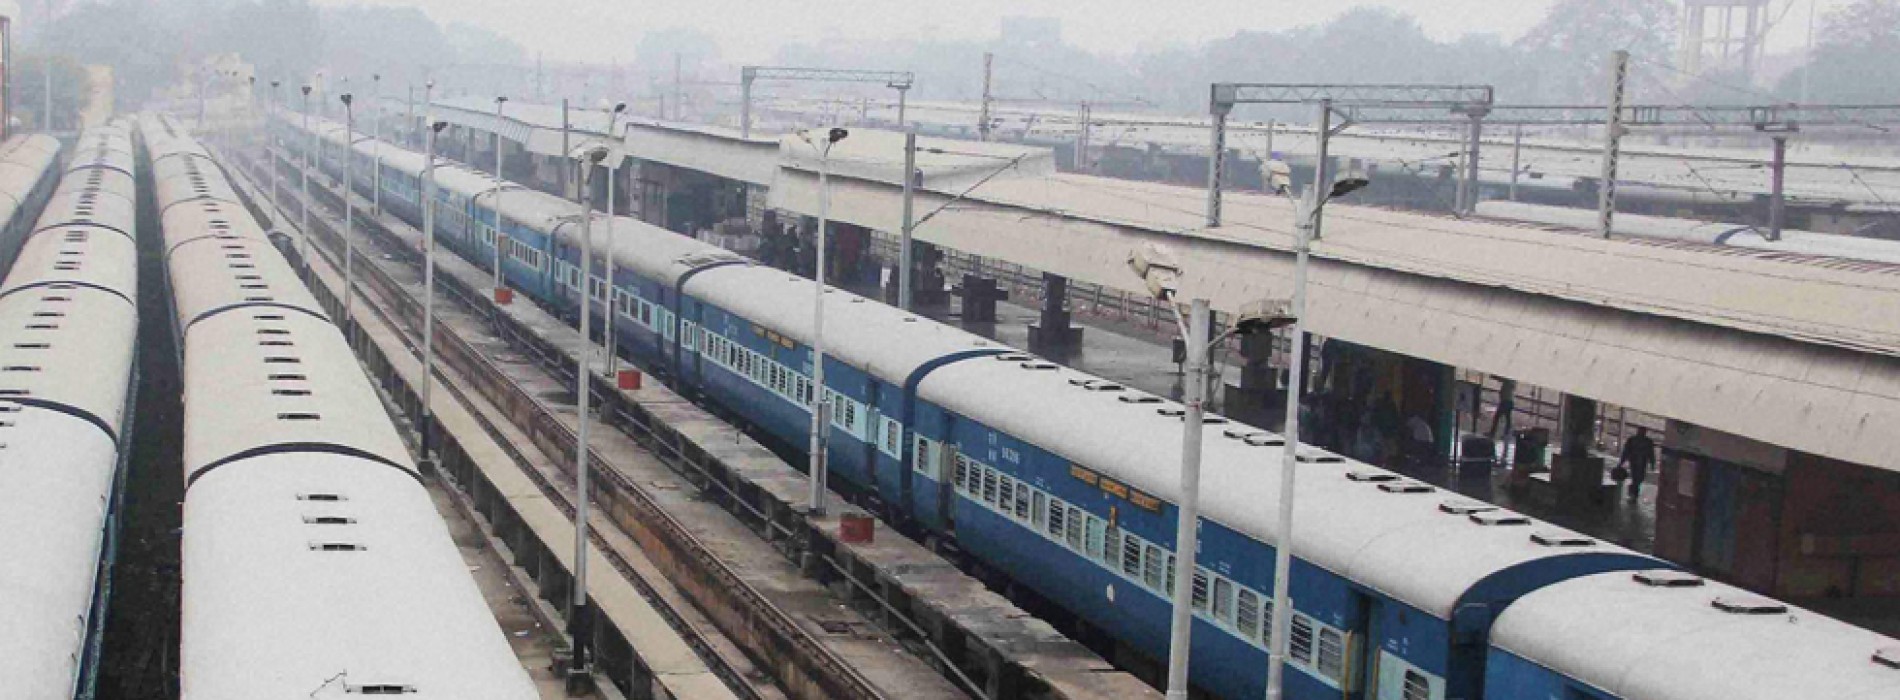 Central Railways to run Durga Puja special trains between Mumbai and Howrah